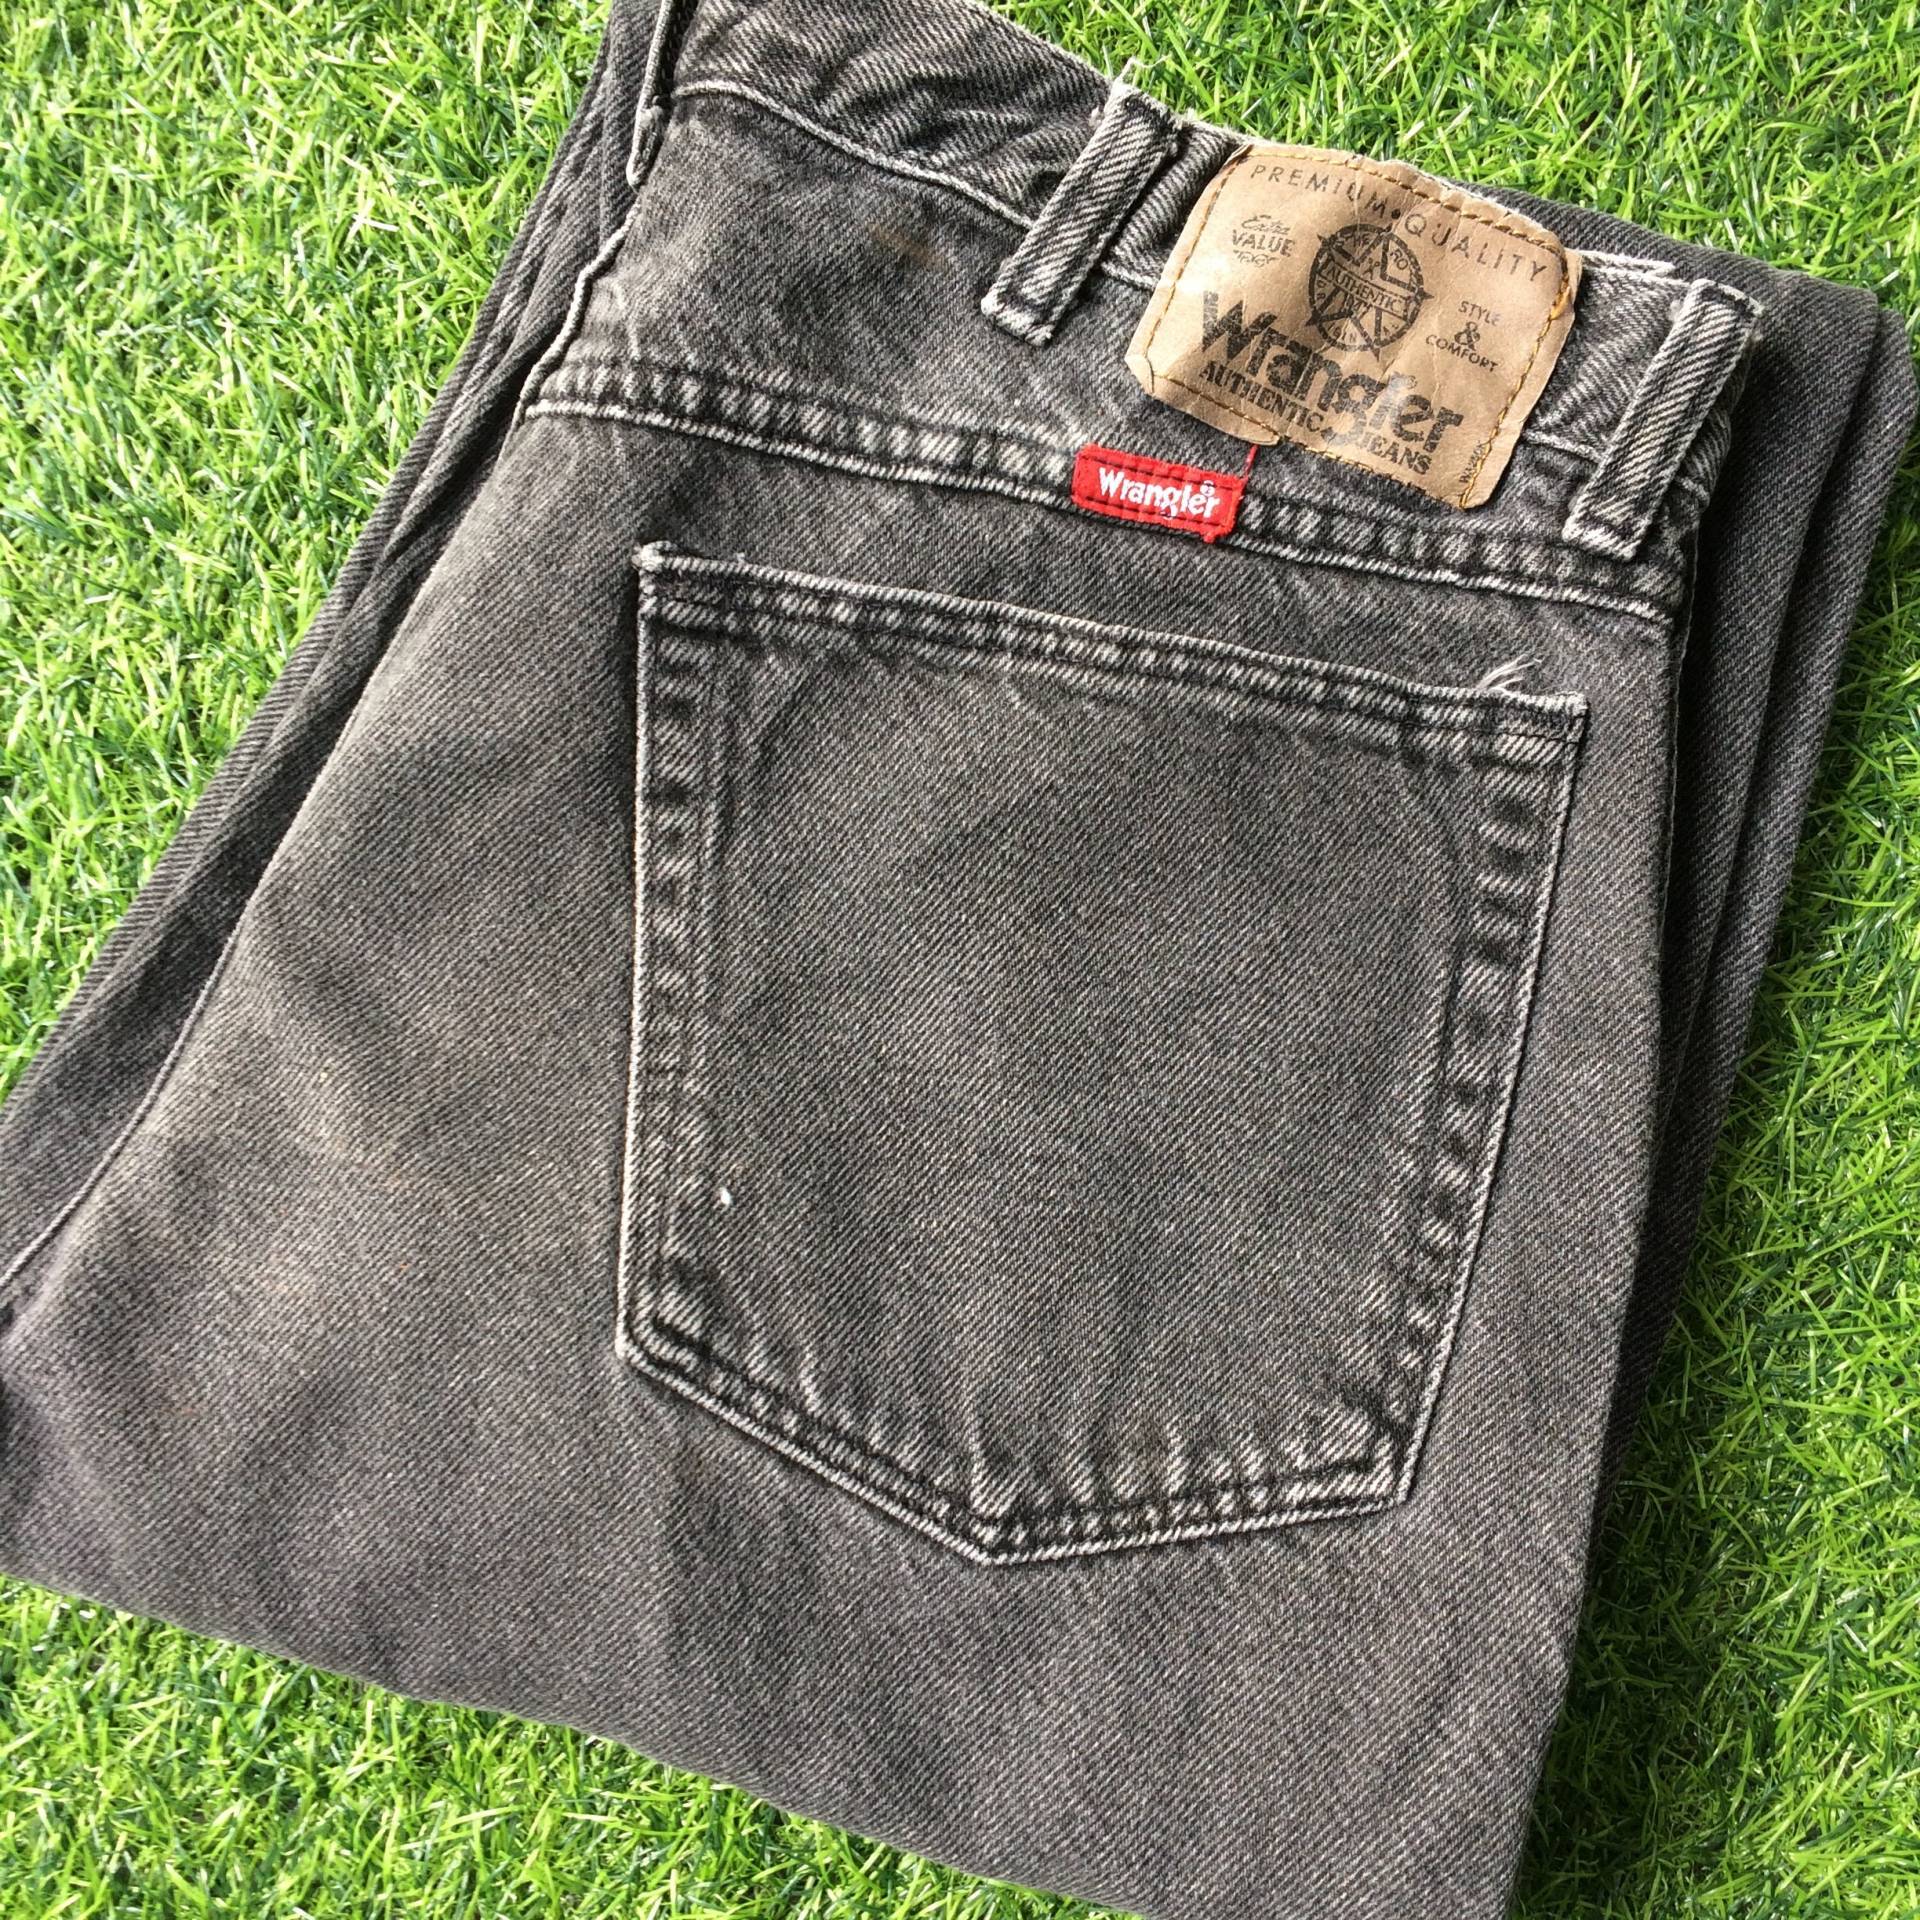 Größe 31 Vintage 90Er Wrangler Western Distressed Jeans W31 L29 Faded Black Wash Rodeo Riders Taille 31" von BackyardFashion